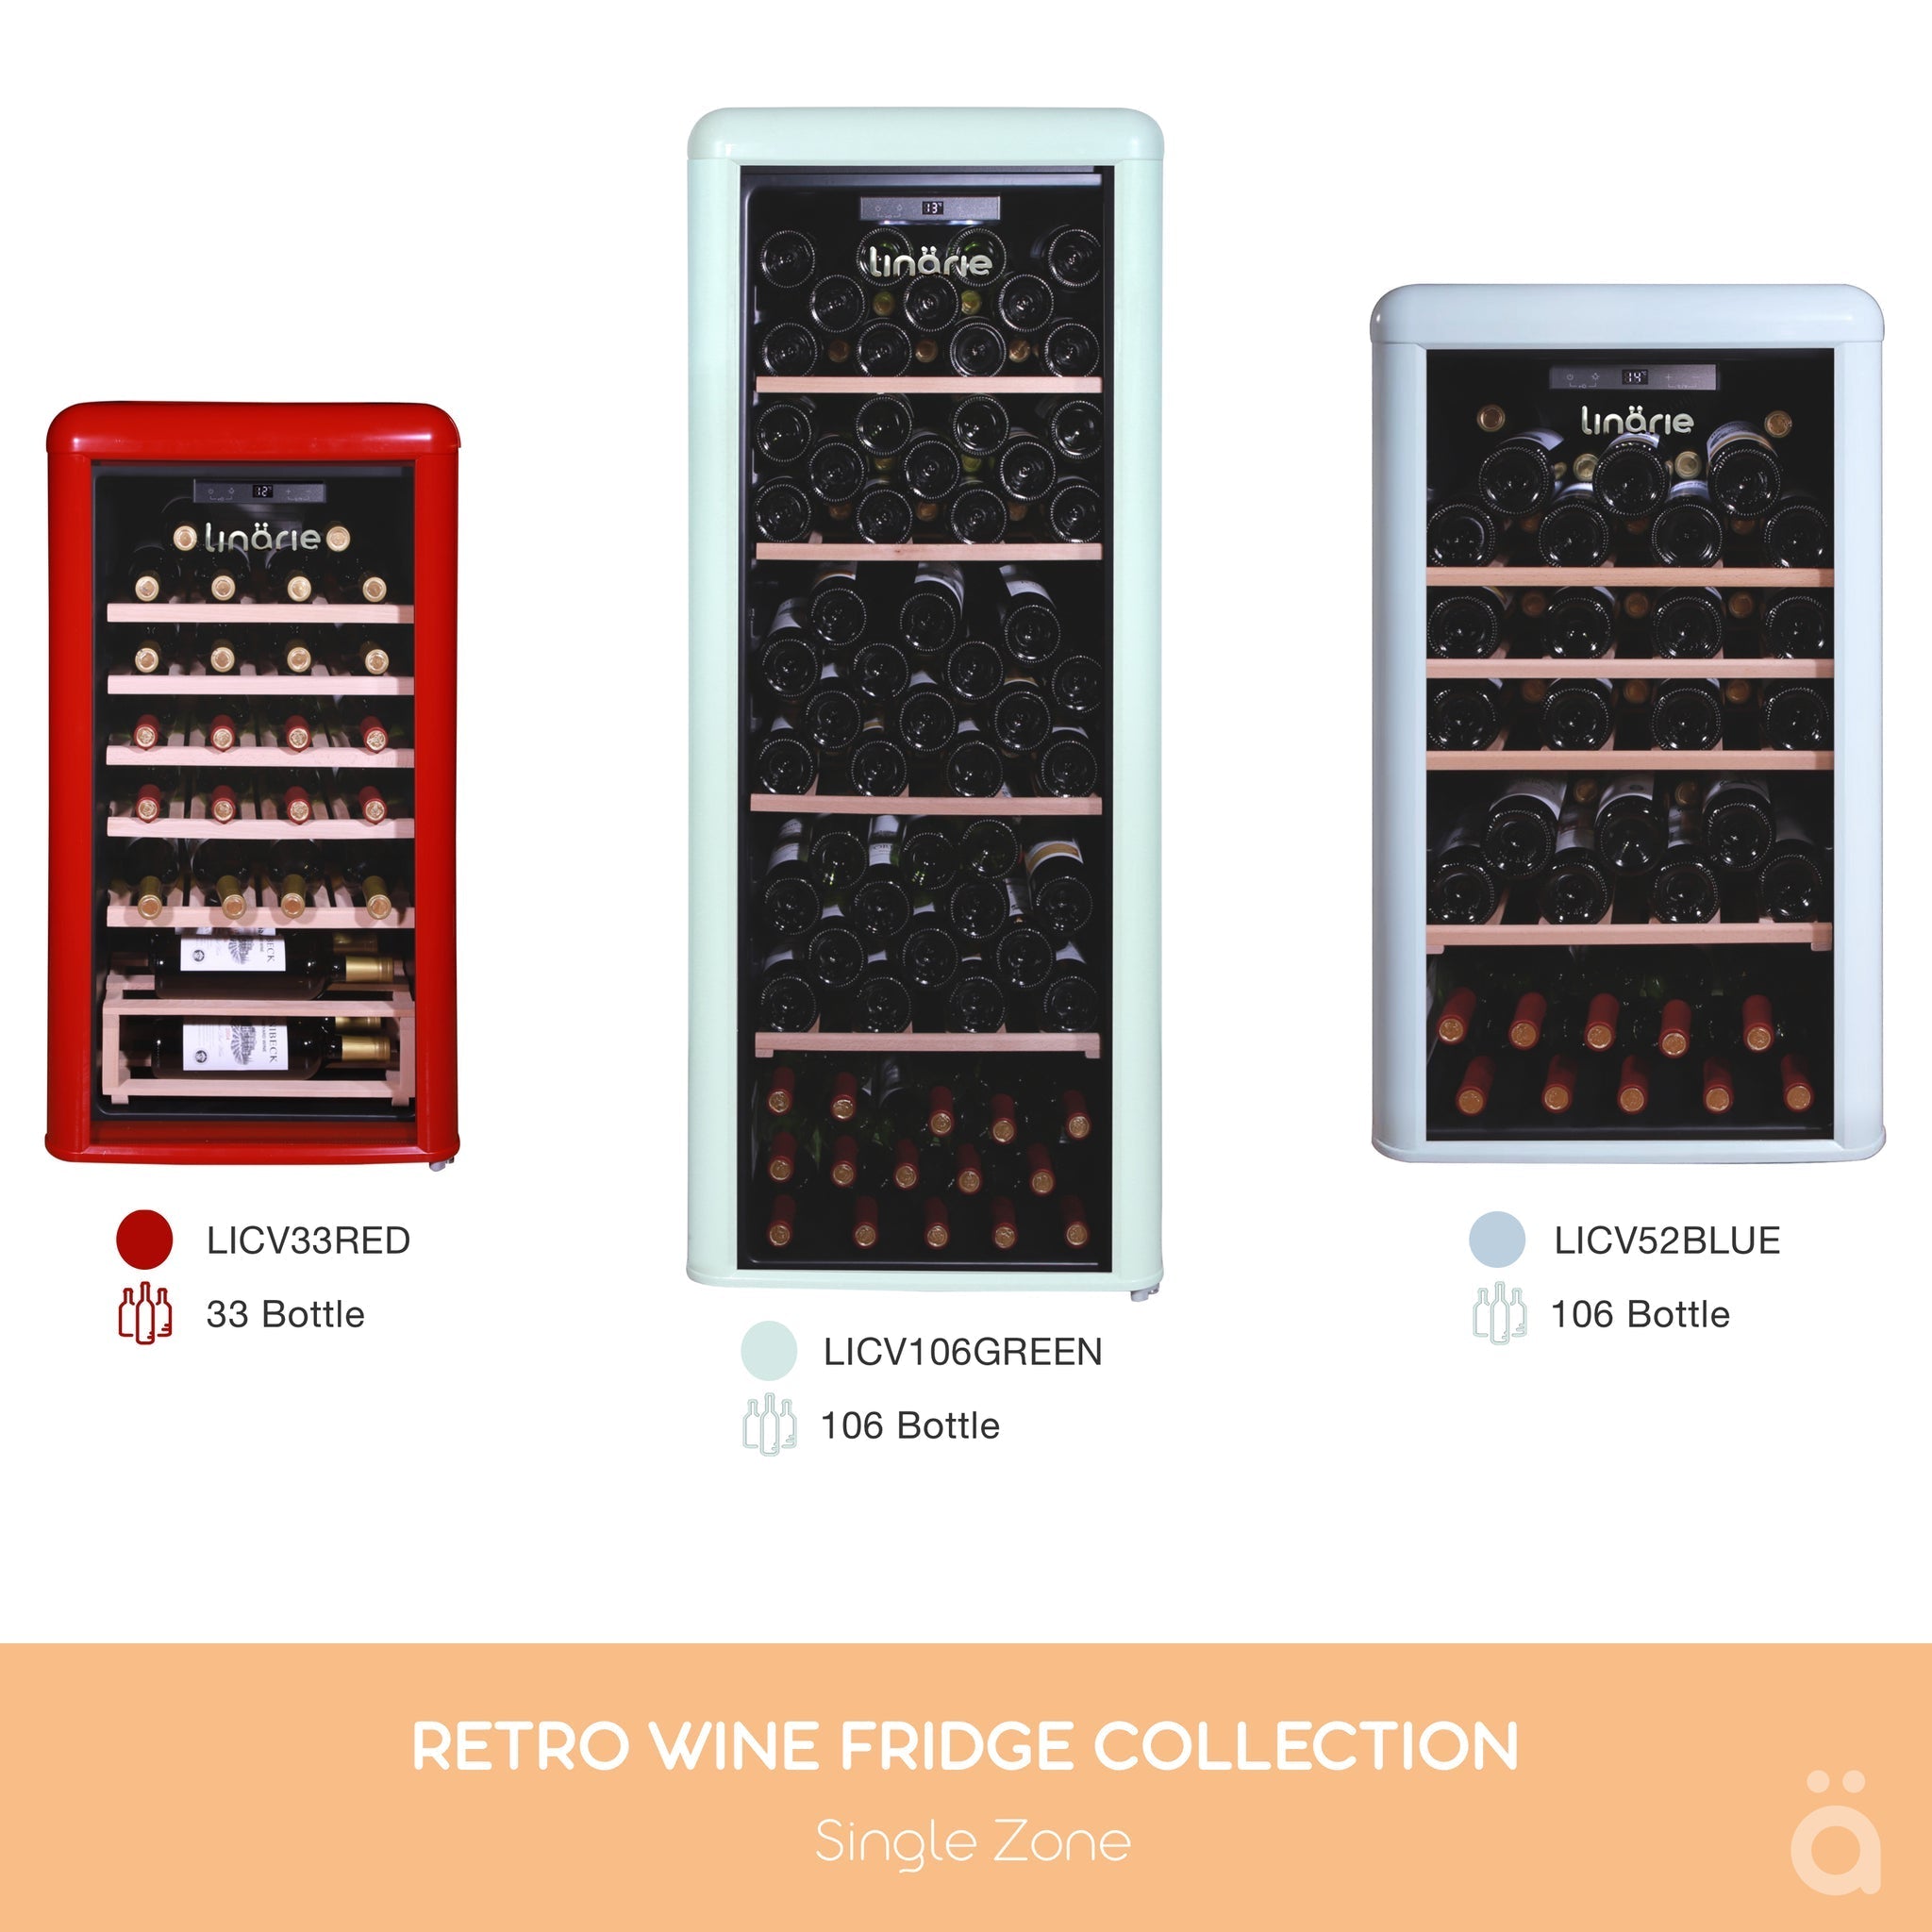 Linarie retro wine fridges size reference sheet